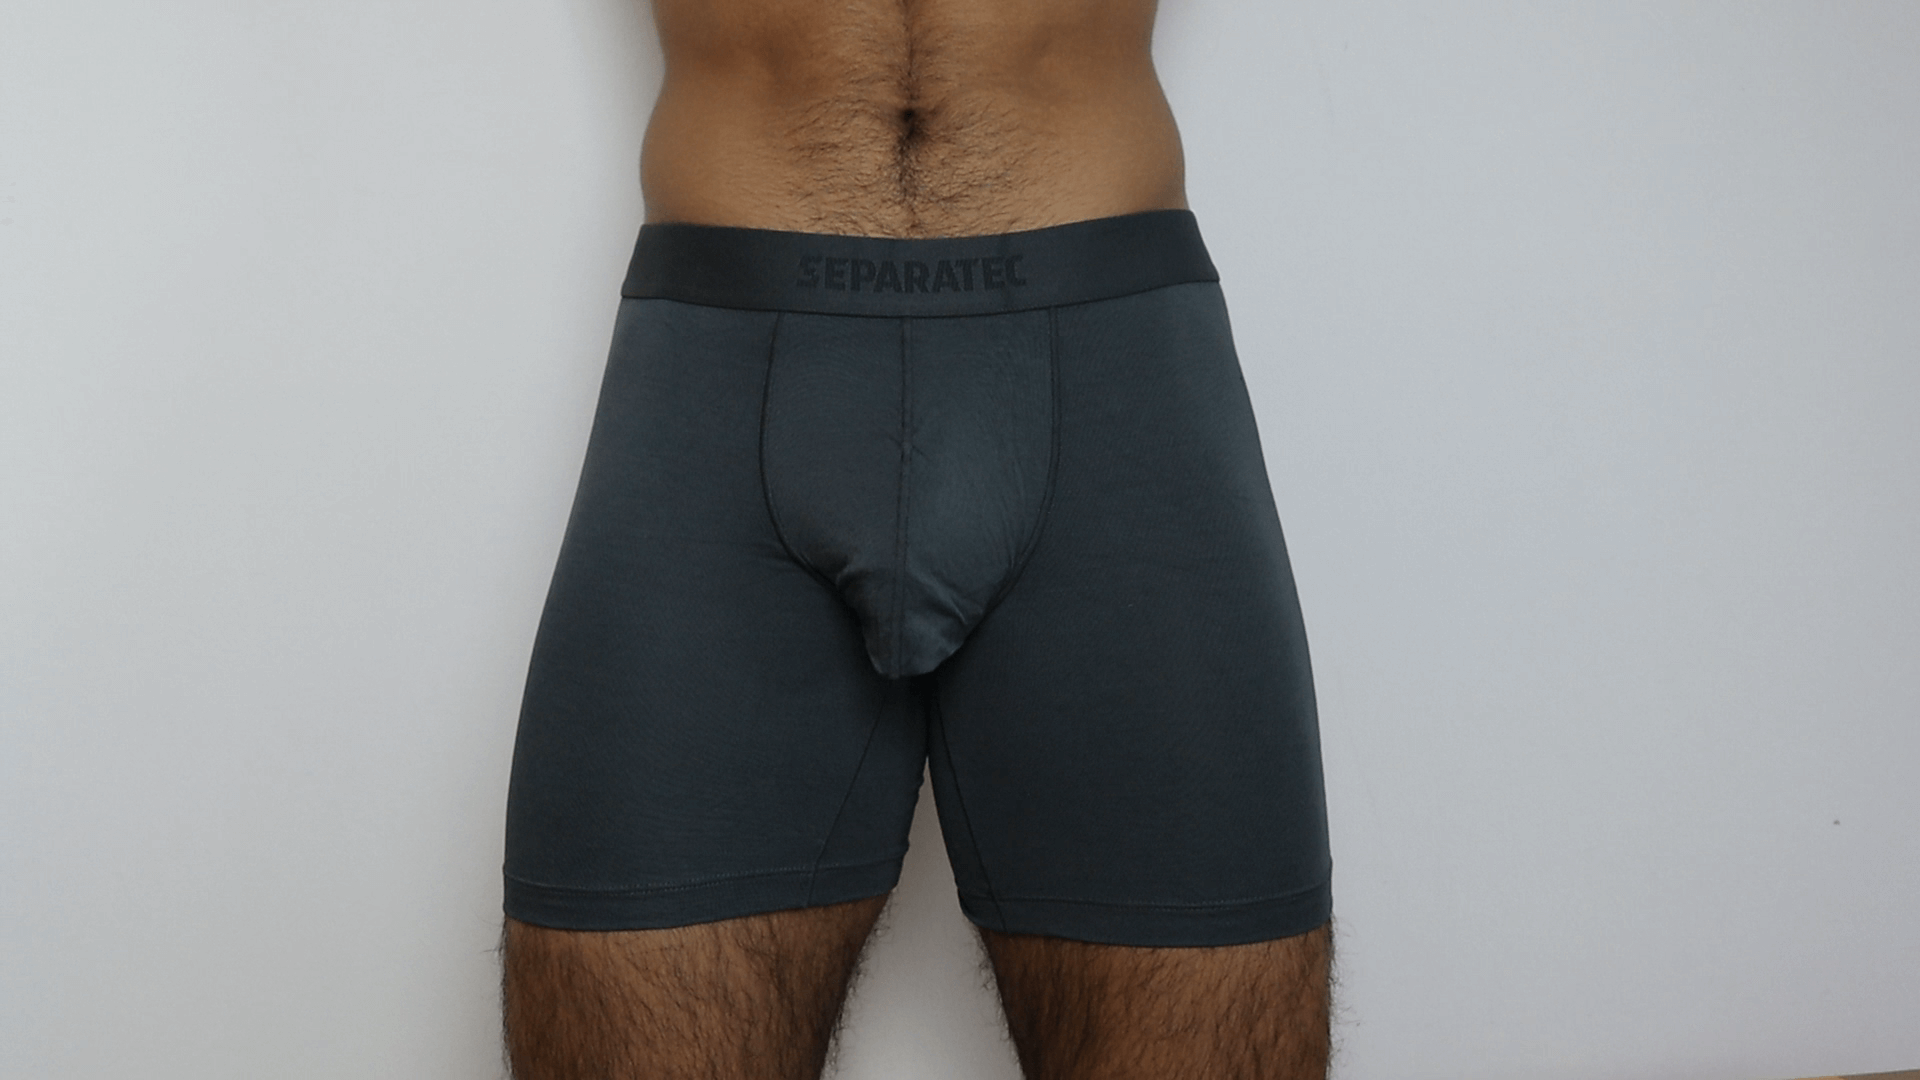 Separatec Bamboo Boxer Briefs: A Game-Changer in Men’s Underwear